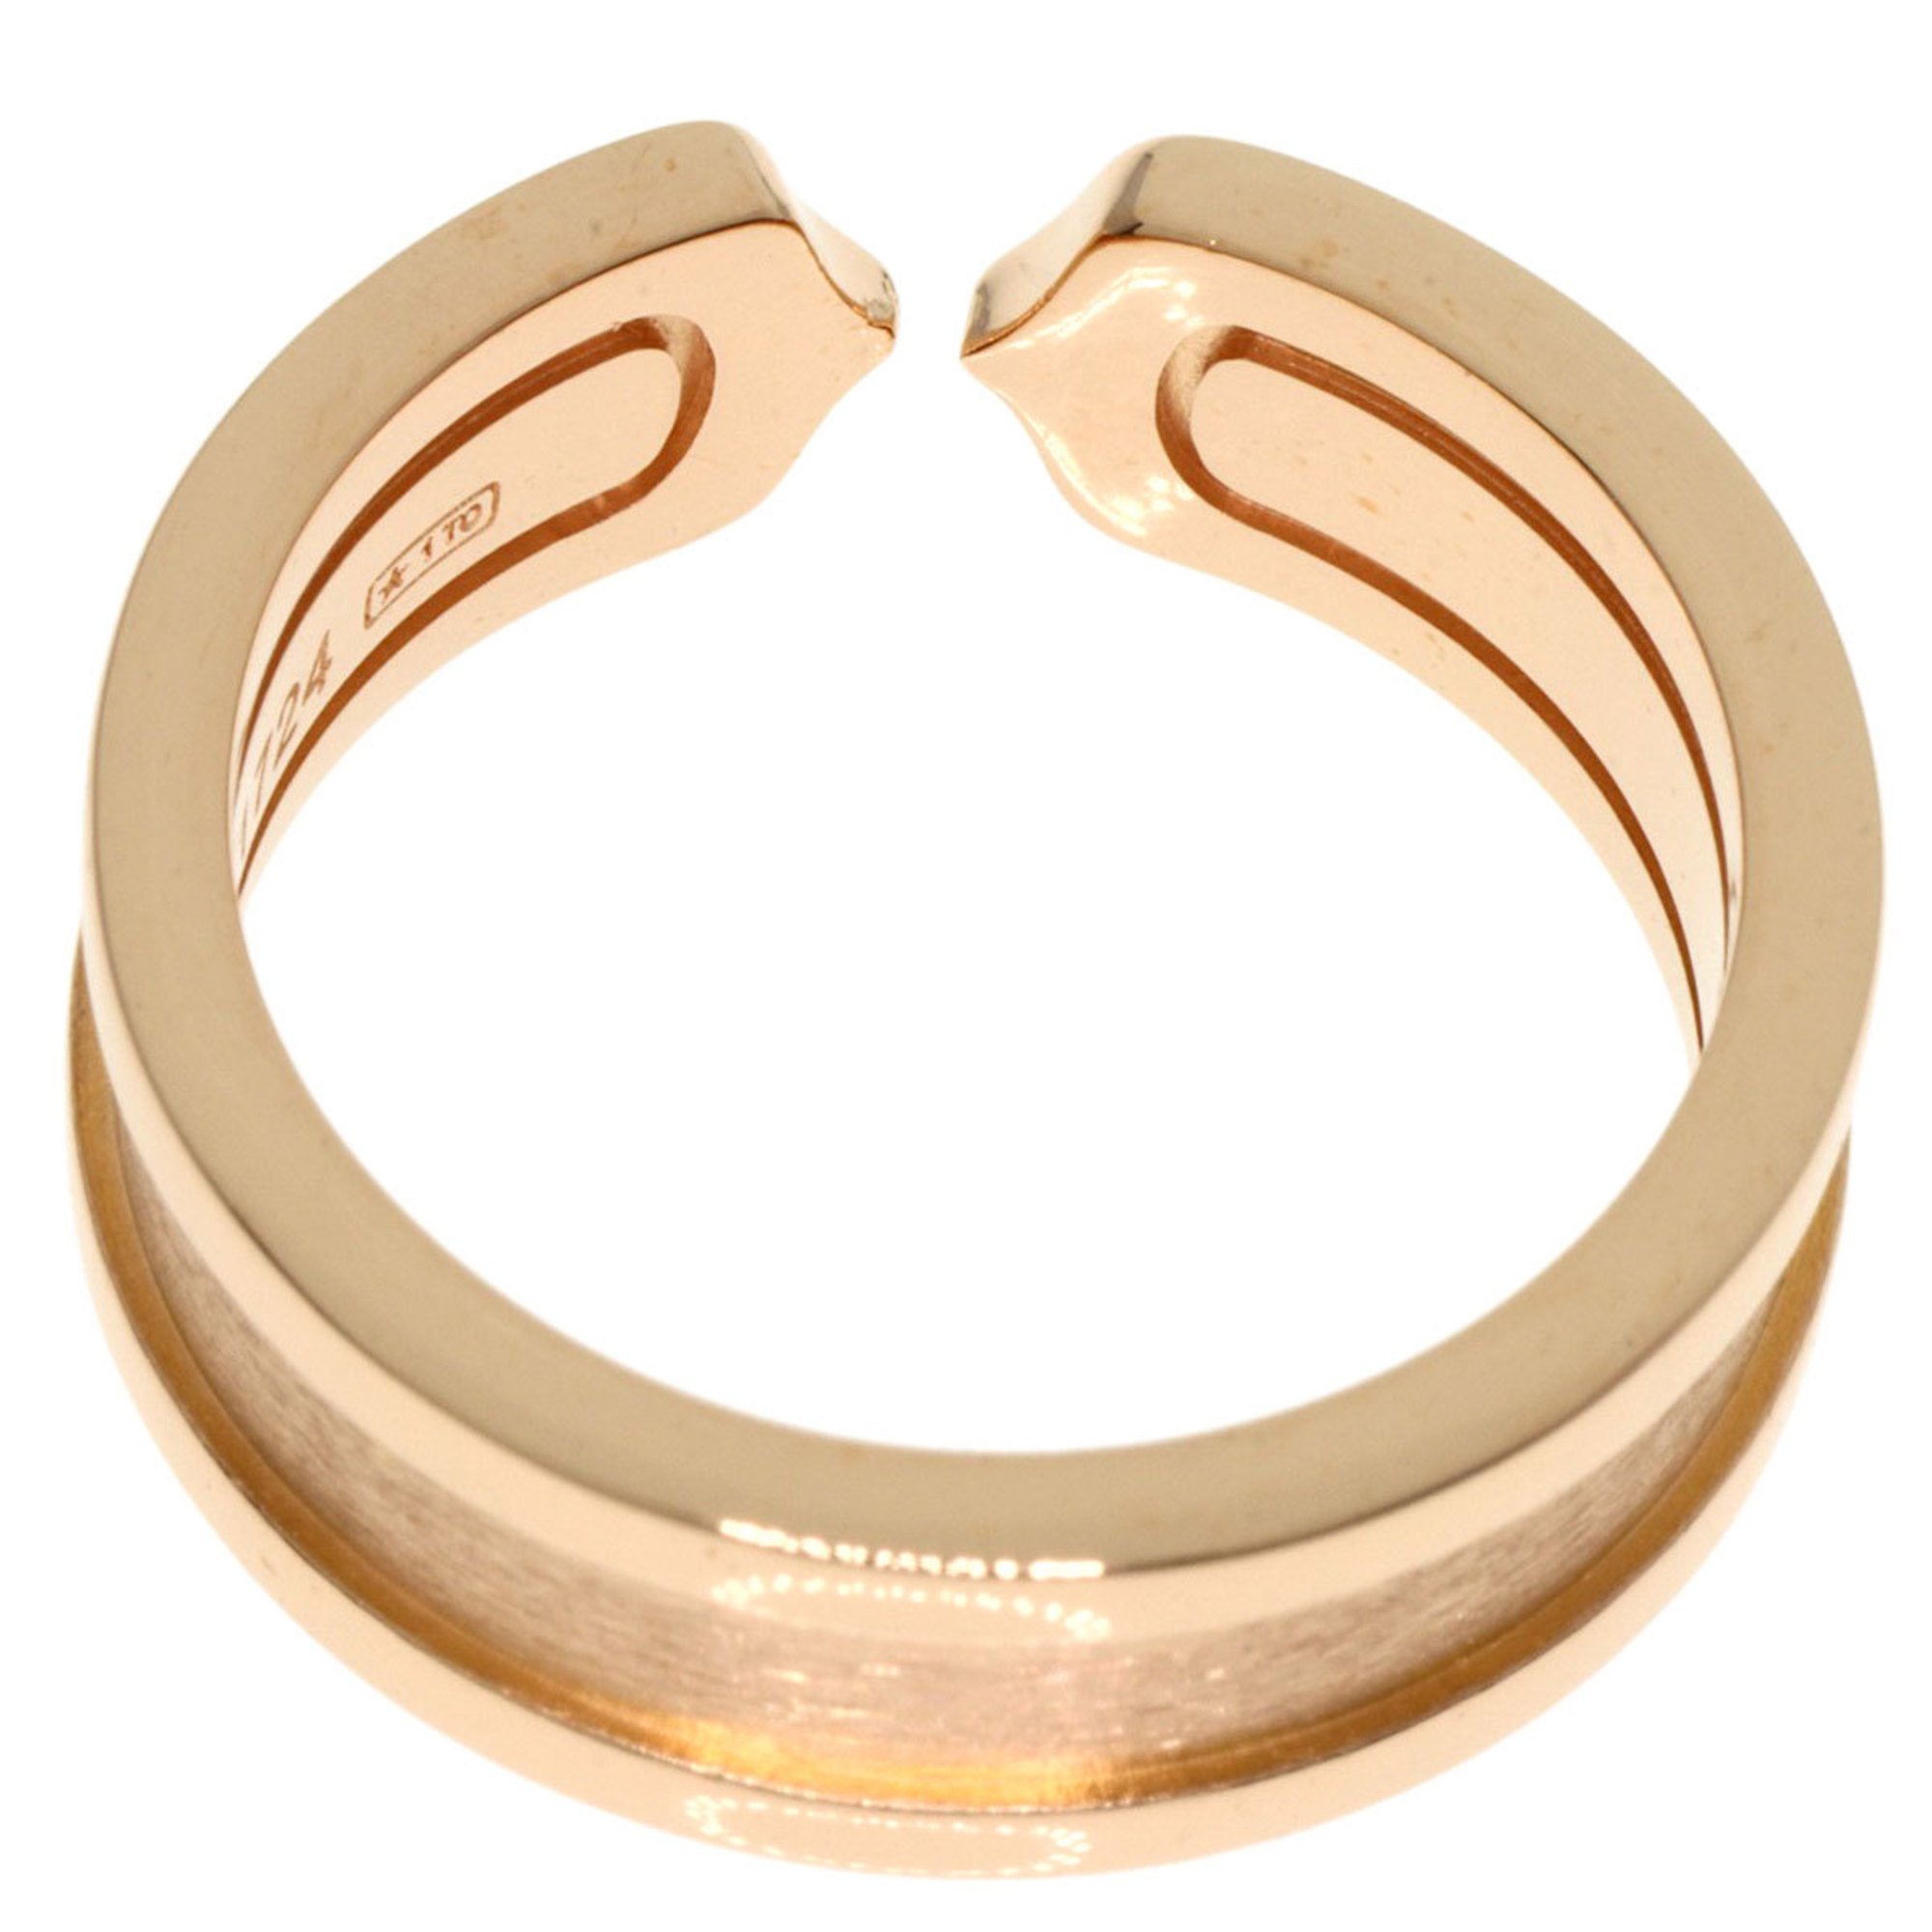 Cartier C2 Ring #52 Ring, 18K Pink Gold, Women's, CARTIER